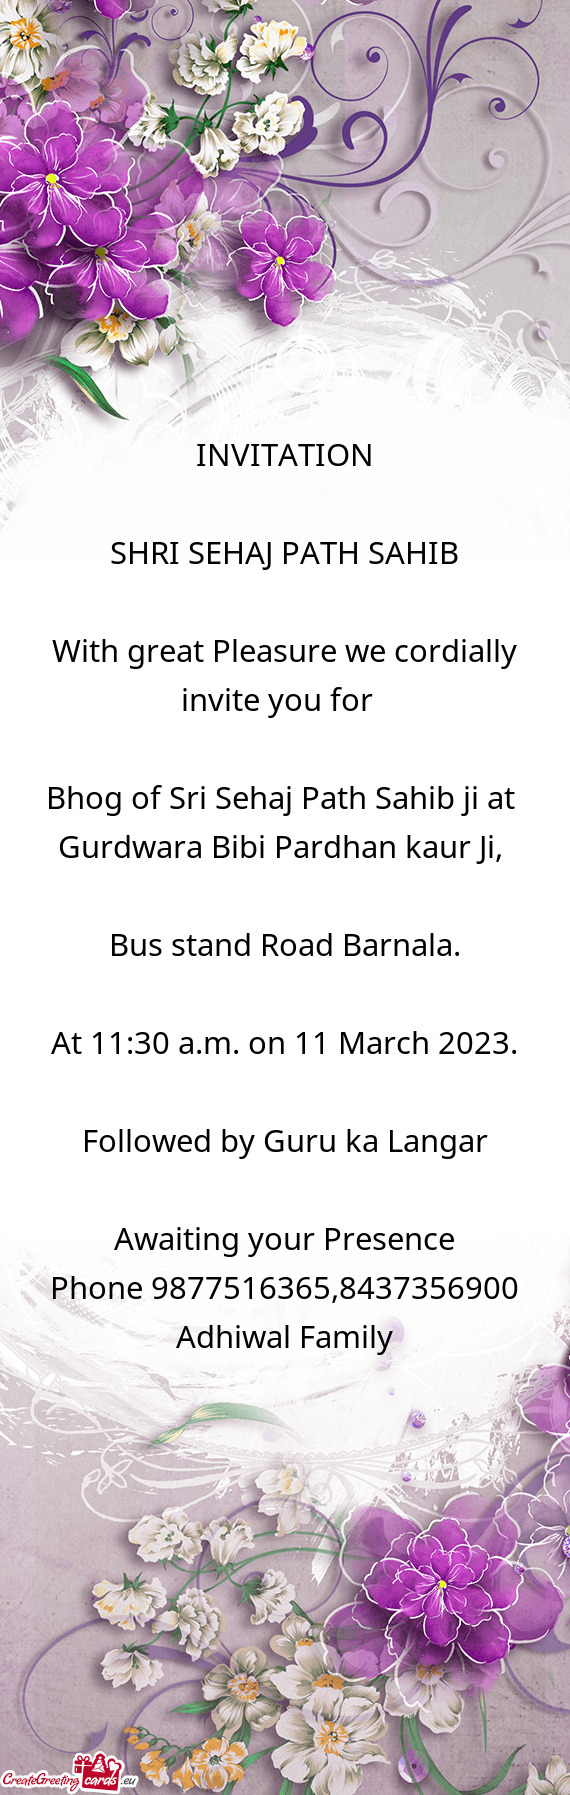 Gurdwara Bibi Pardhan kaur Ji